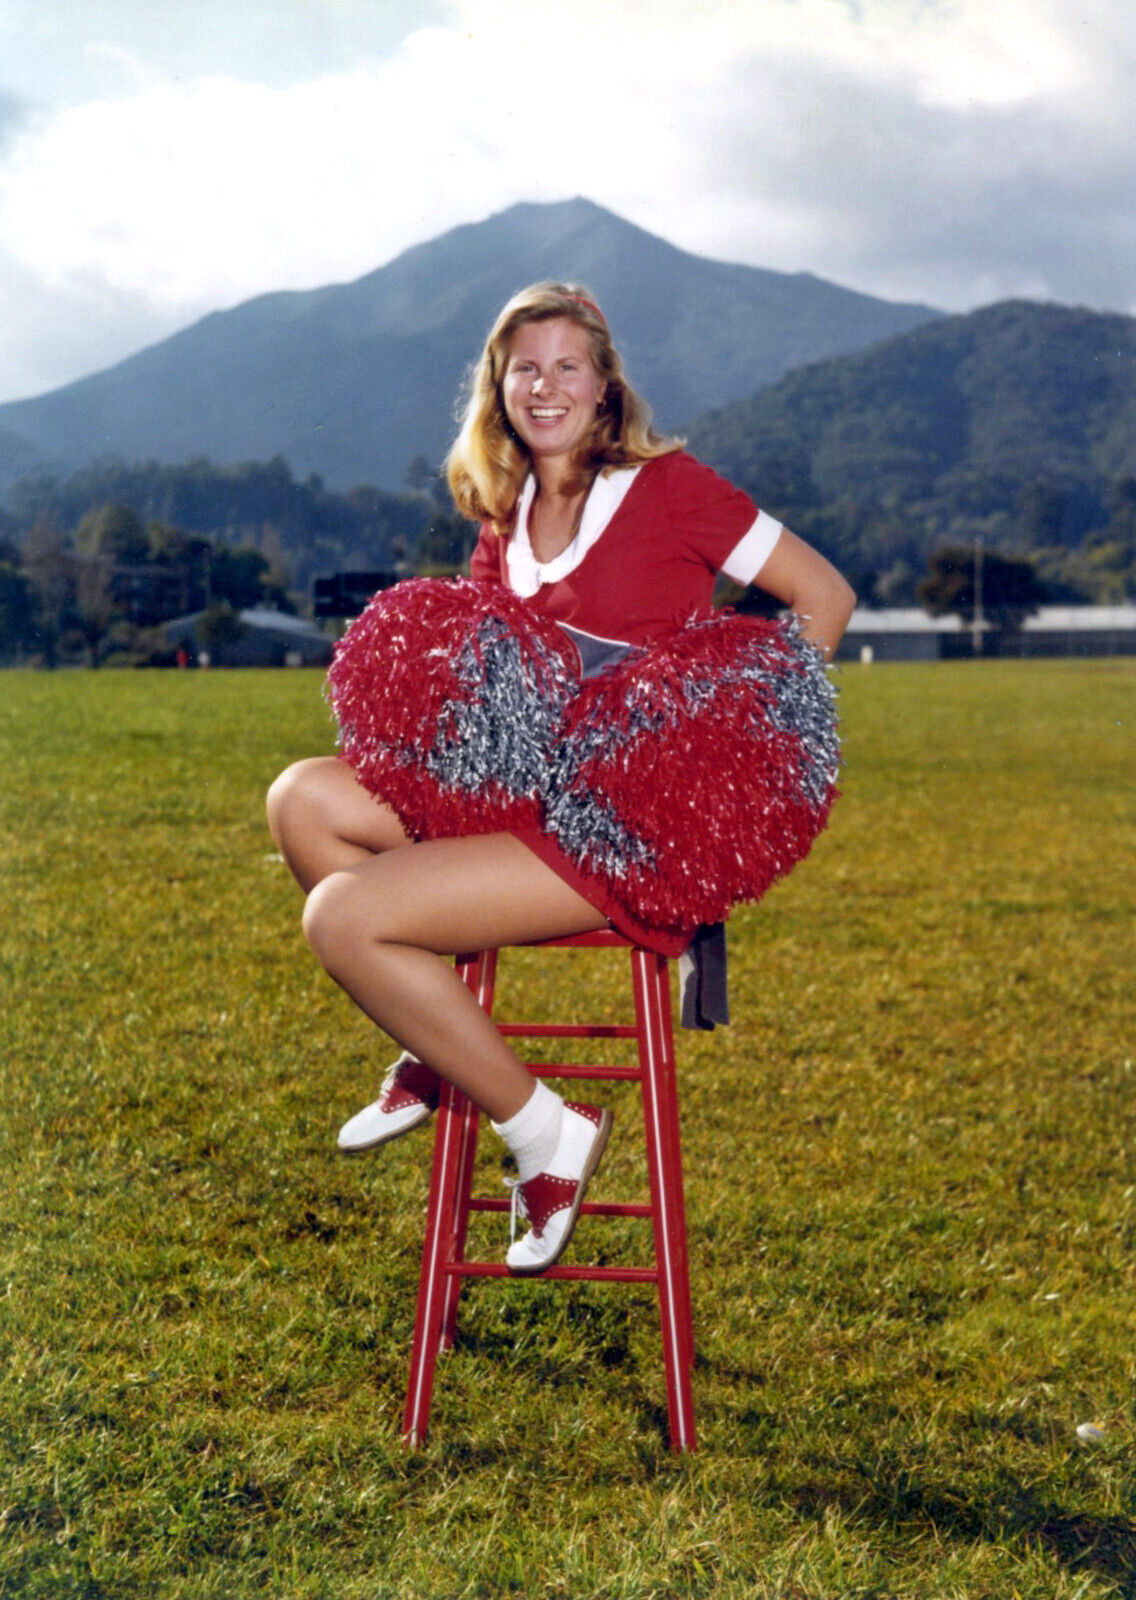 Vintage-Very Cute Teen Girl Cheerleader with Pom,Poms1970/80\'s-Original-Snapshot